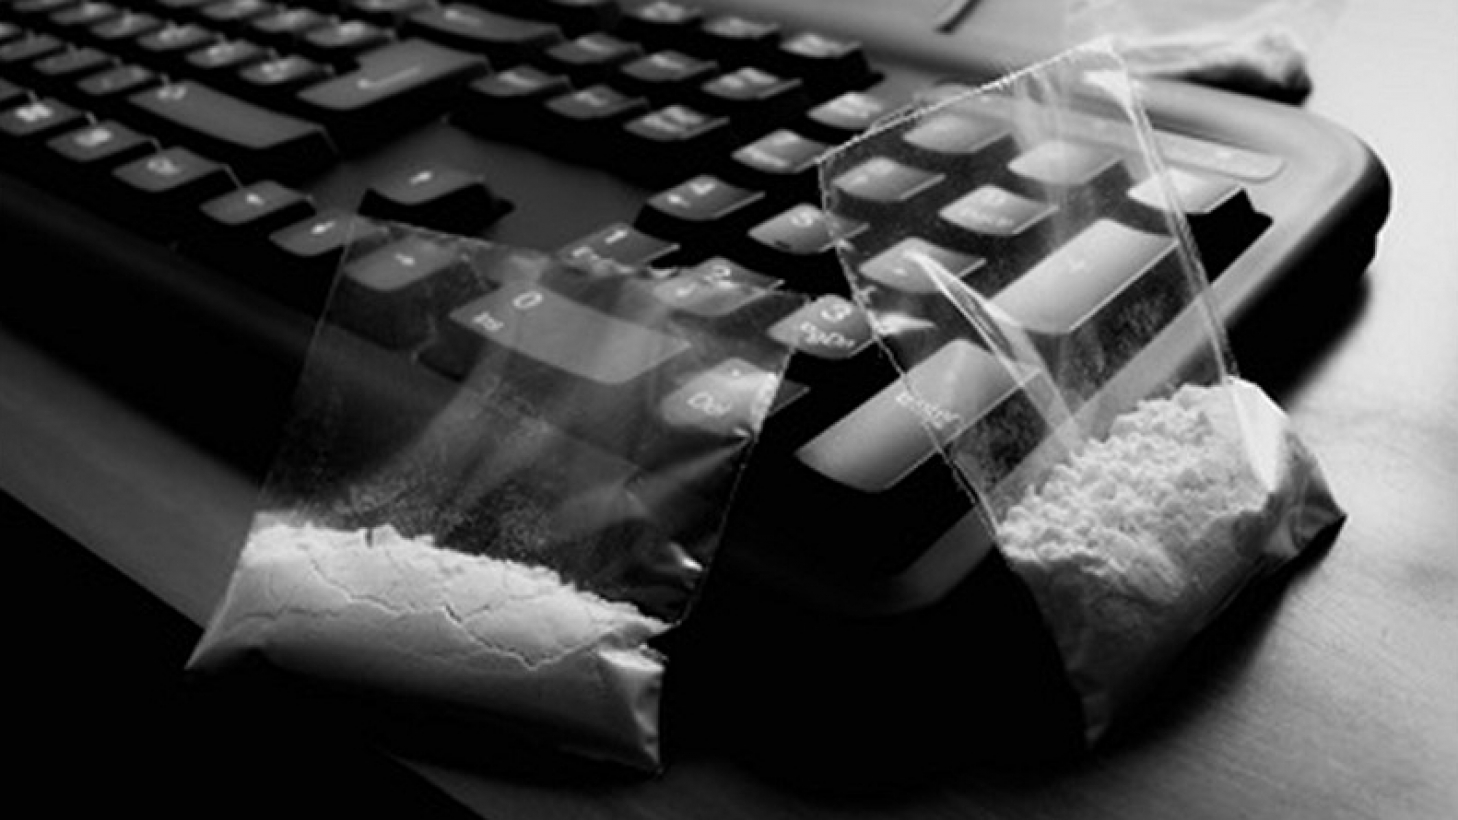 продажа наркотиков по интернет